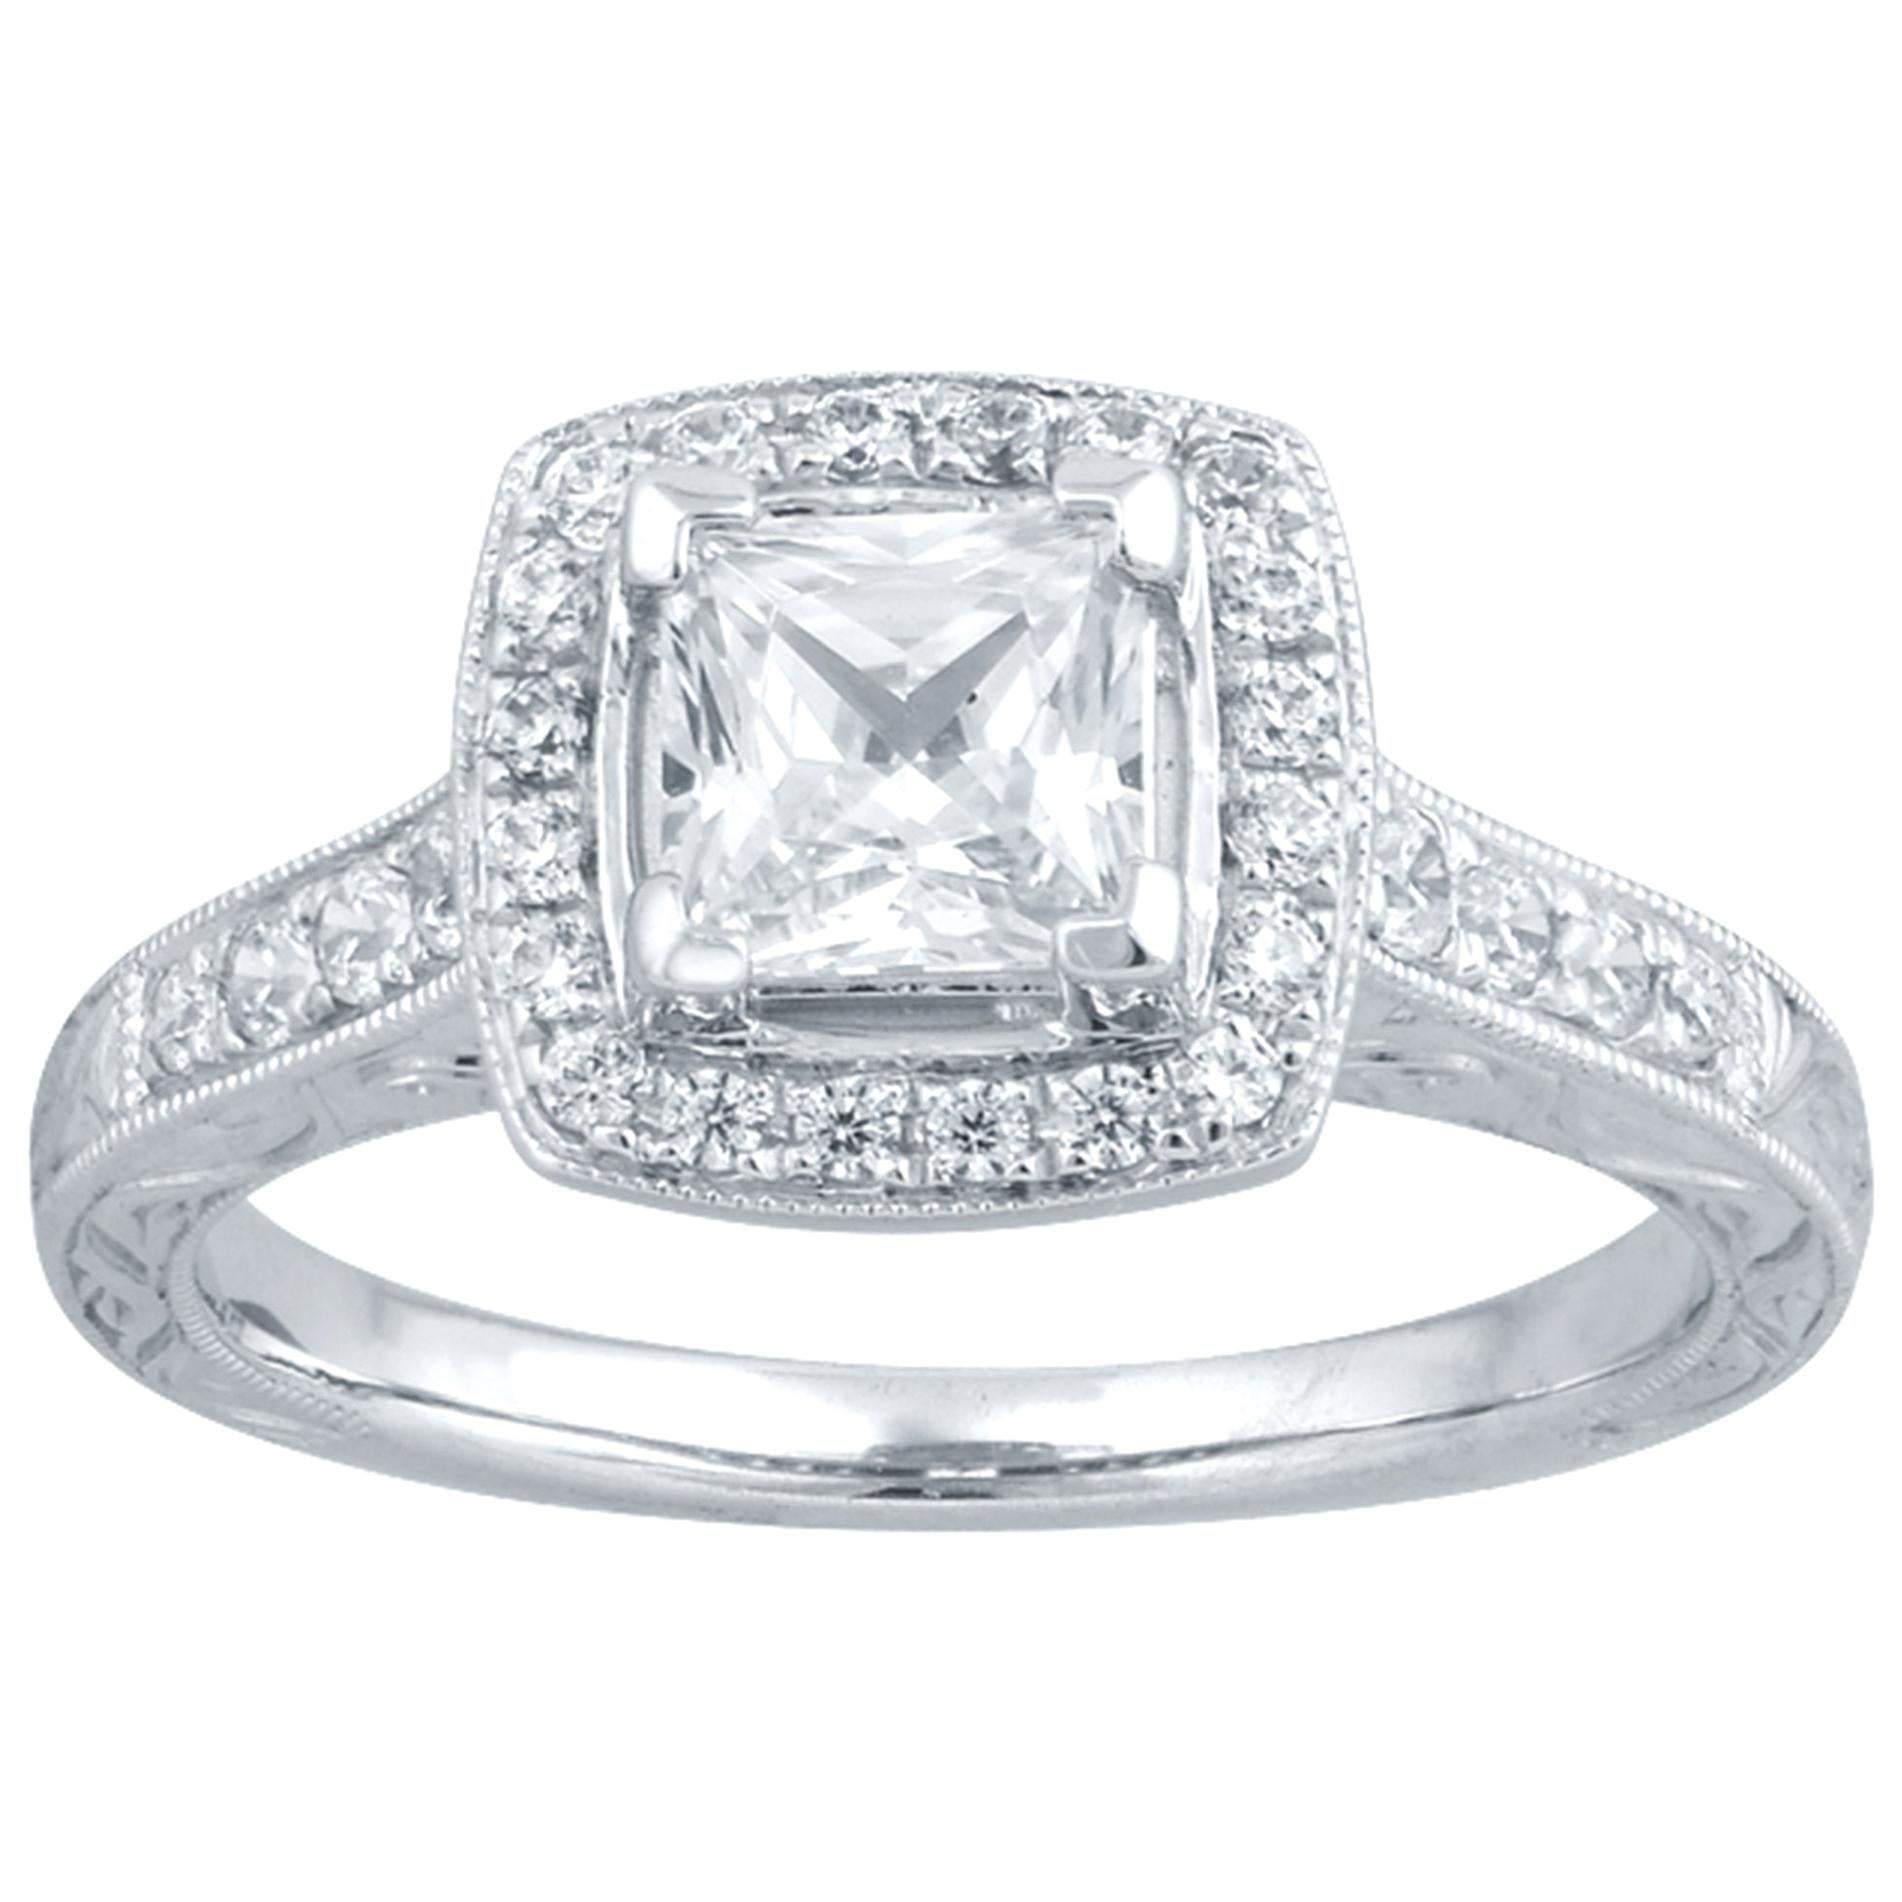 TJD 1.10Carat Round & Princess Cut Diamond 18K White Gold Square Engagement Ring